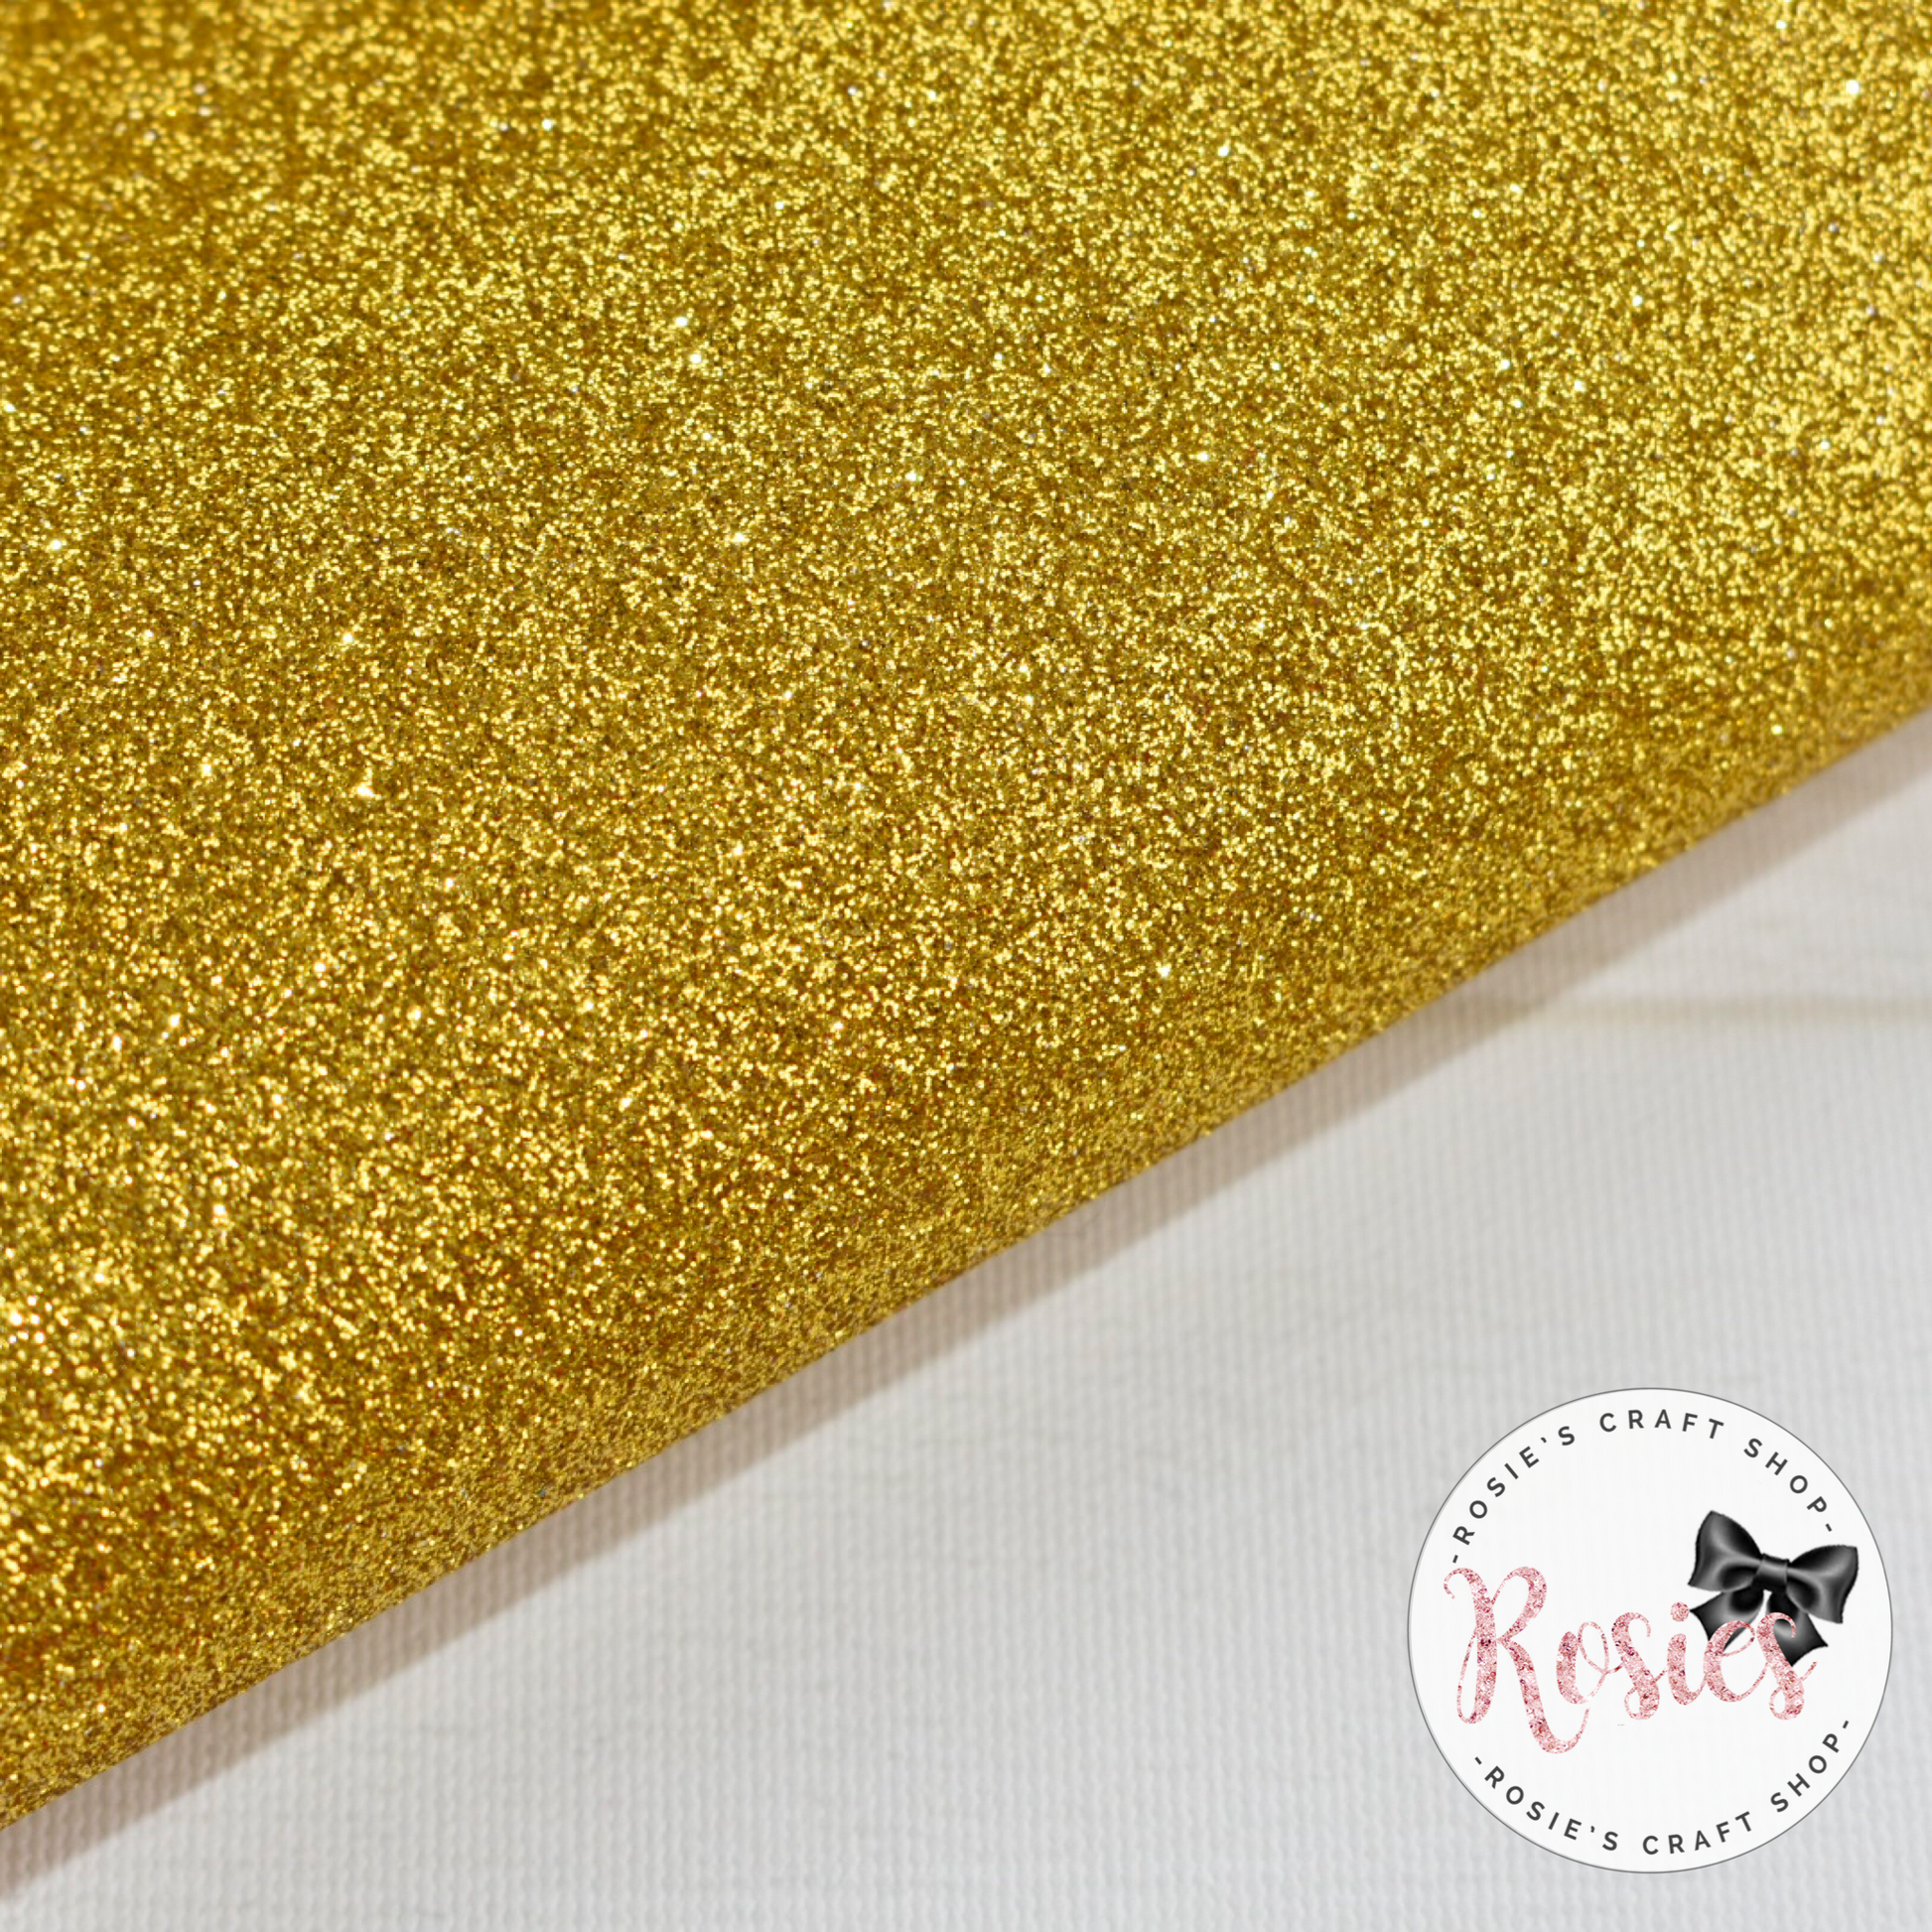 Gold Glitter Iron On Vinyl HTV - Rosie's Craft Shop Ltd